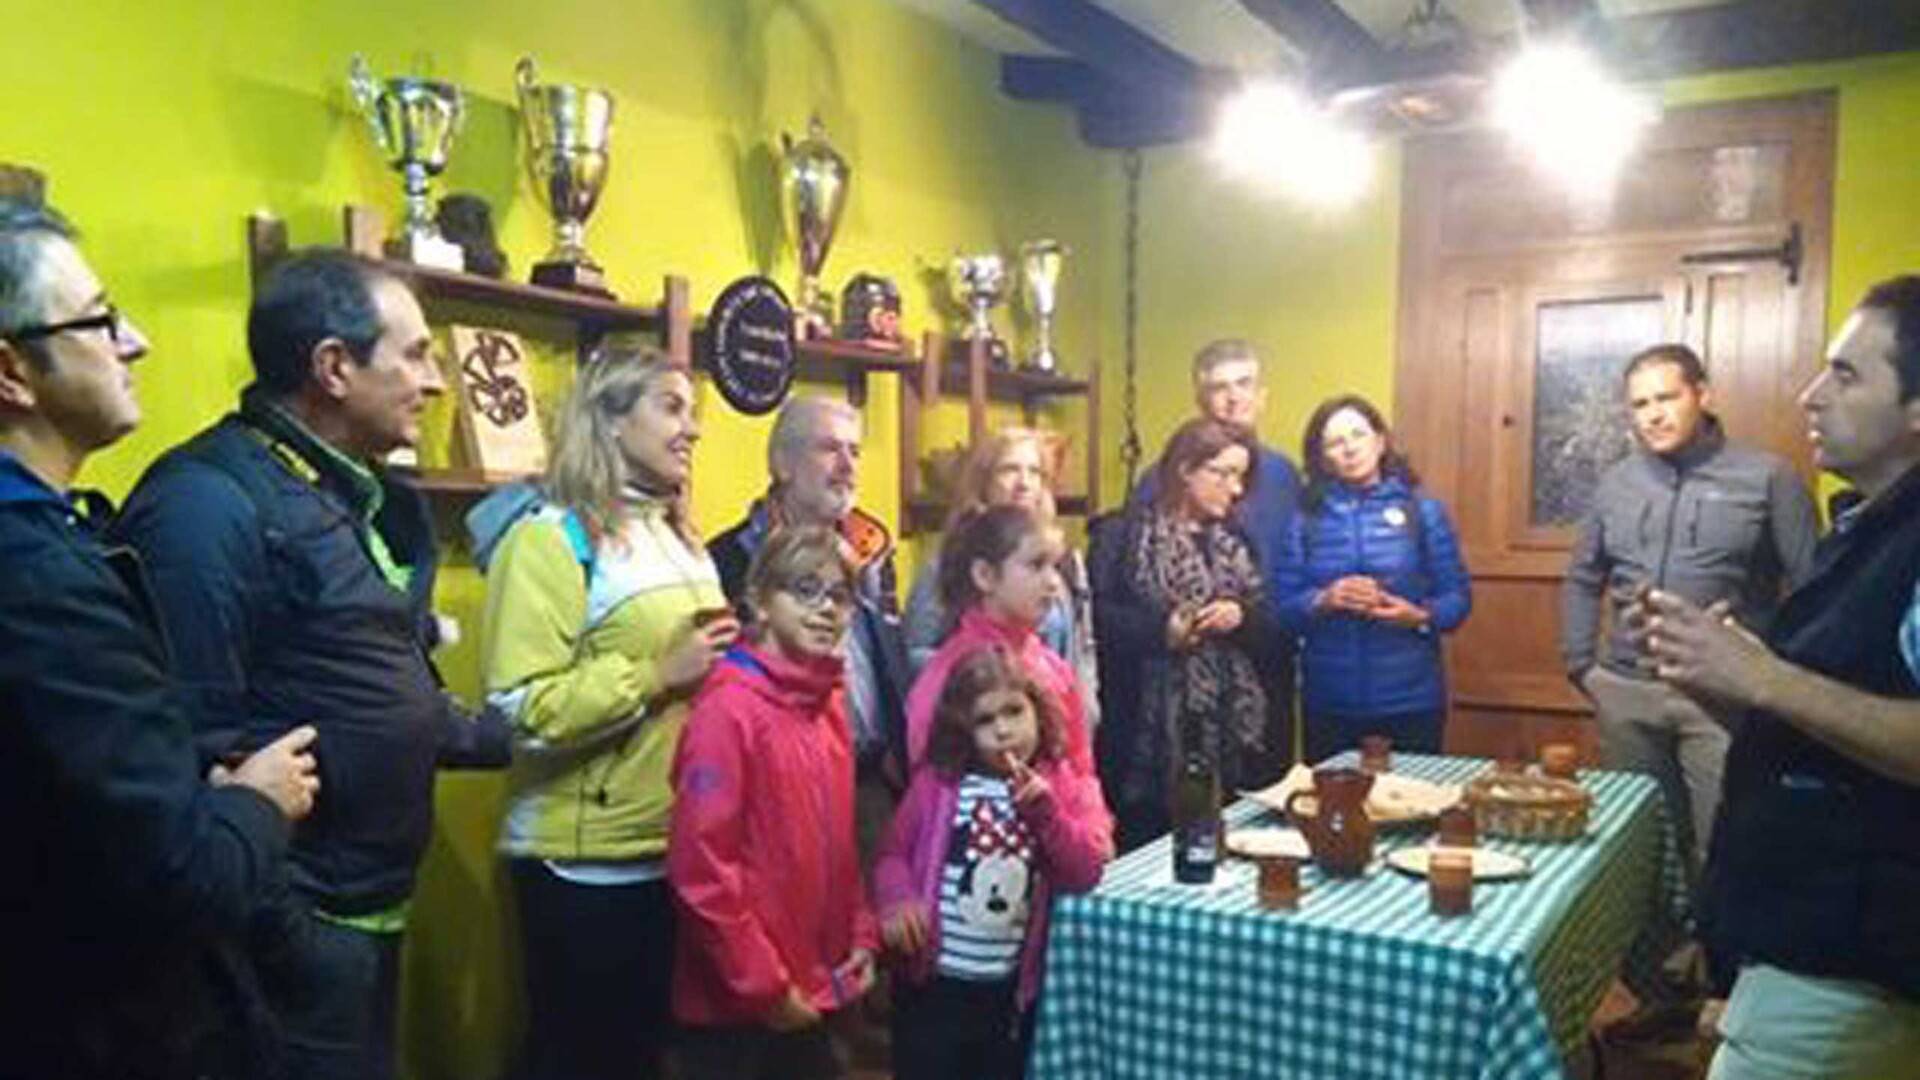 Urrizaga Cheese Factory guided tour